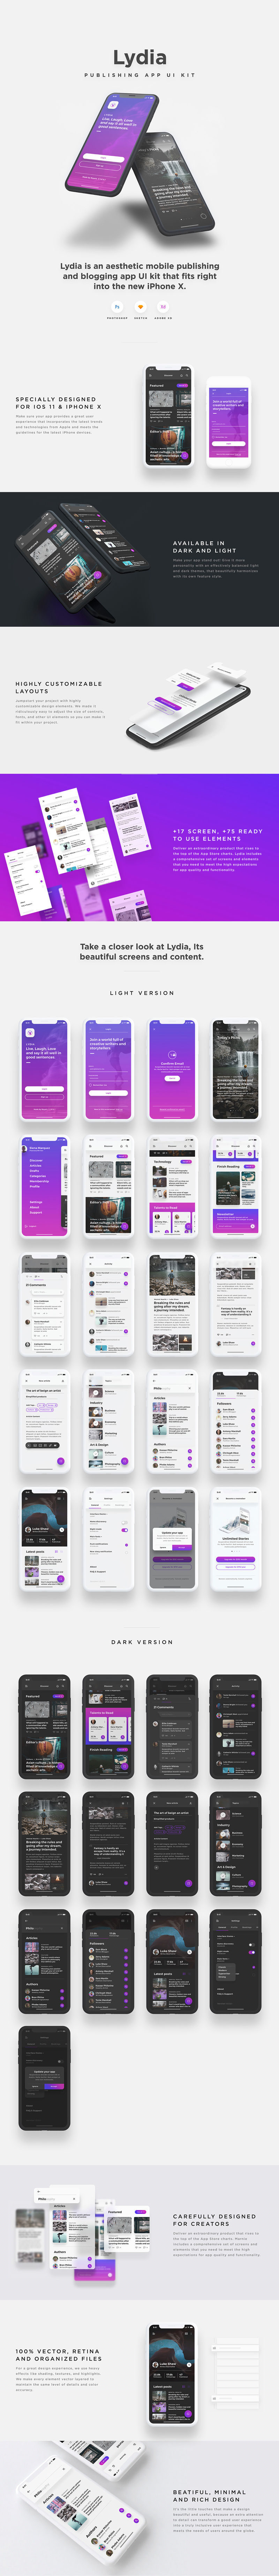 Lydia - Blogging Mobile App UI Kit - Muestra de kit Adobe XD UI